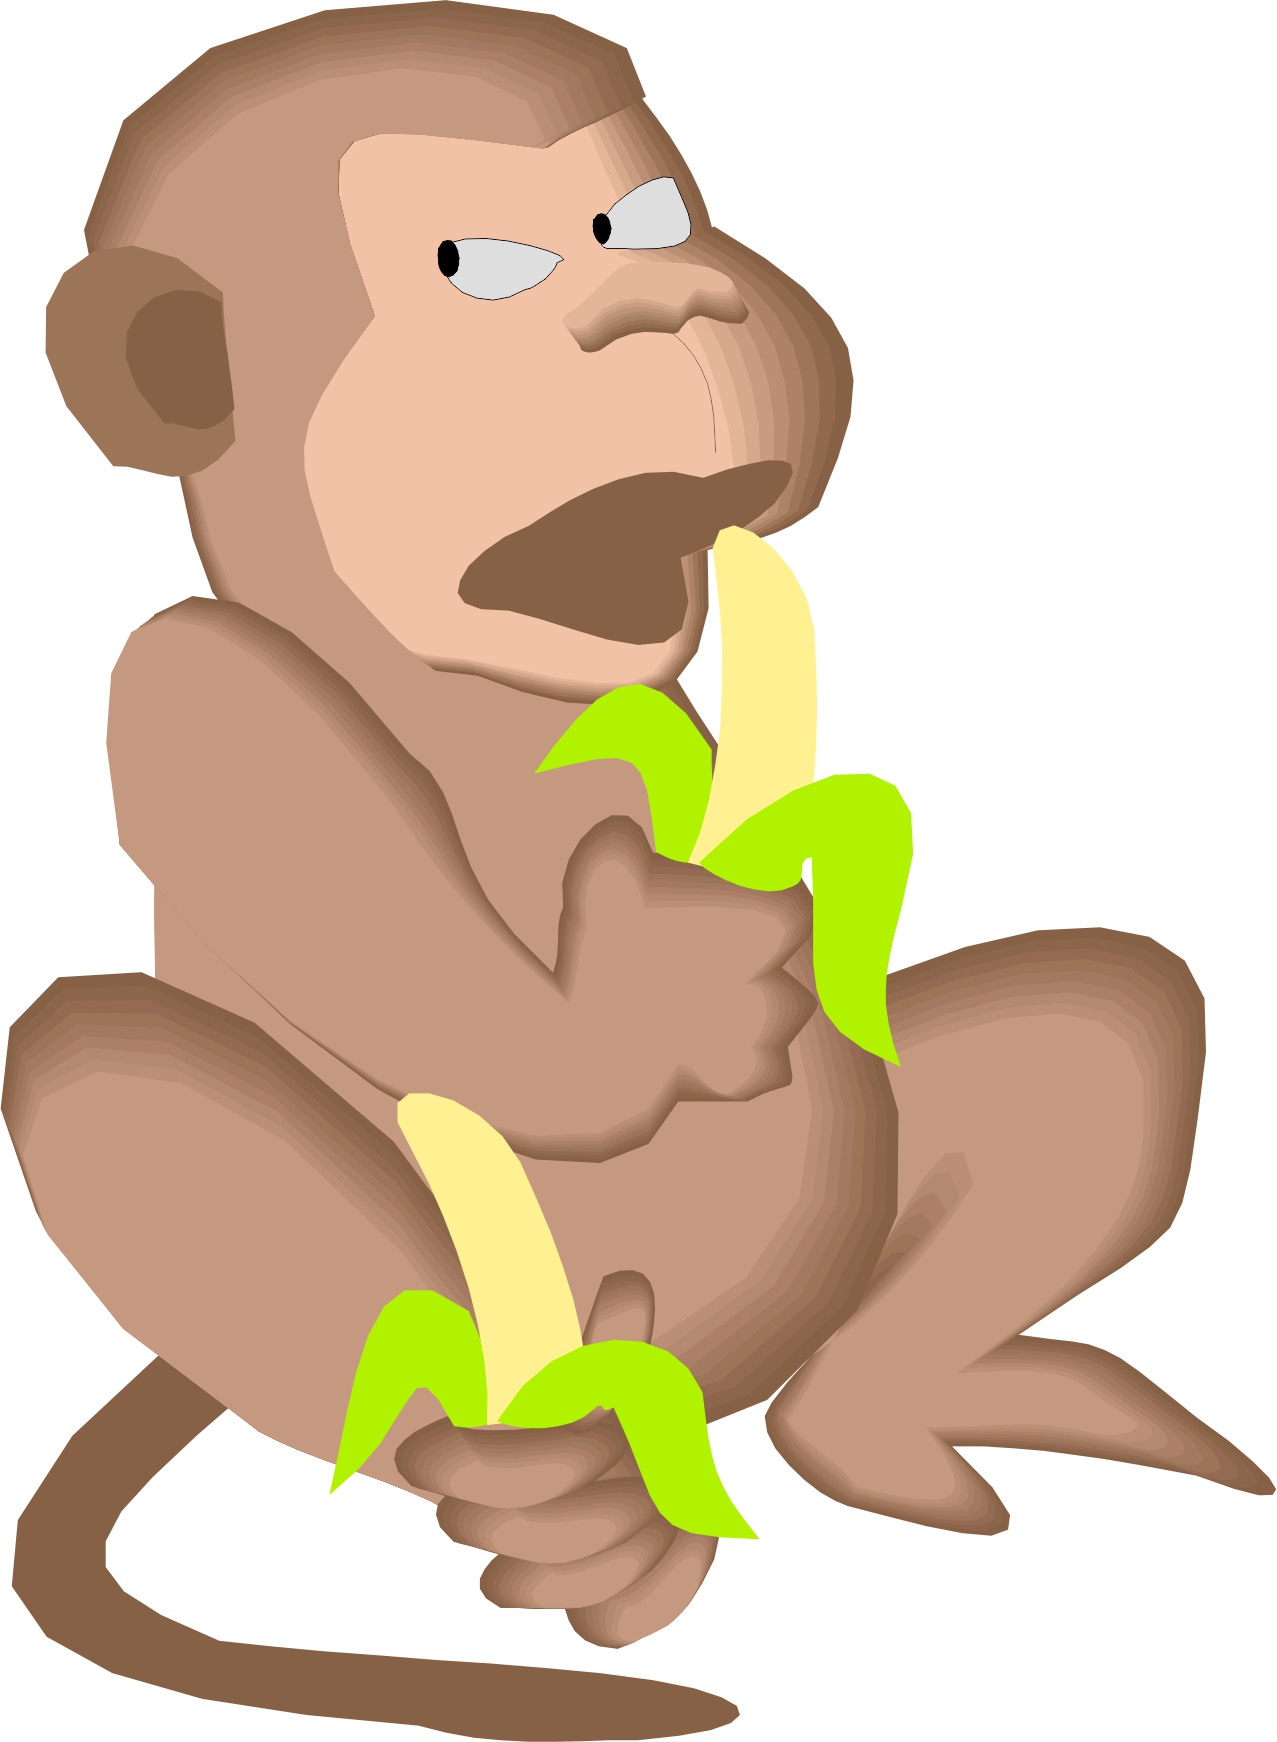 Clipart monkey eating banana